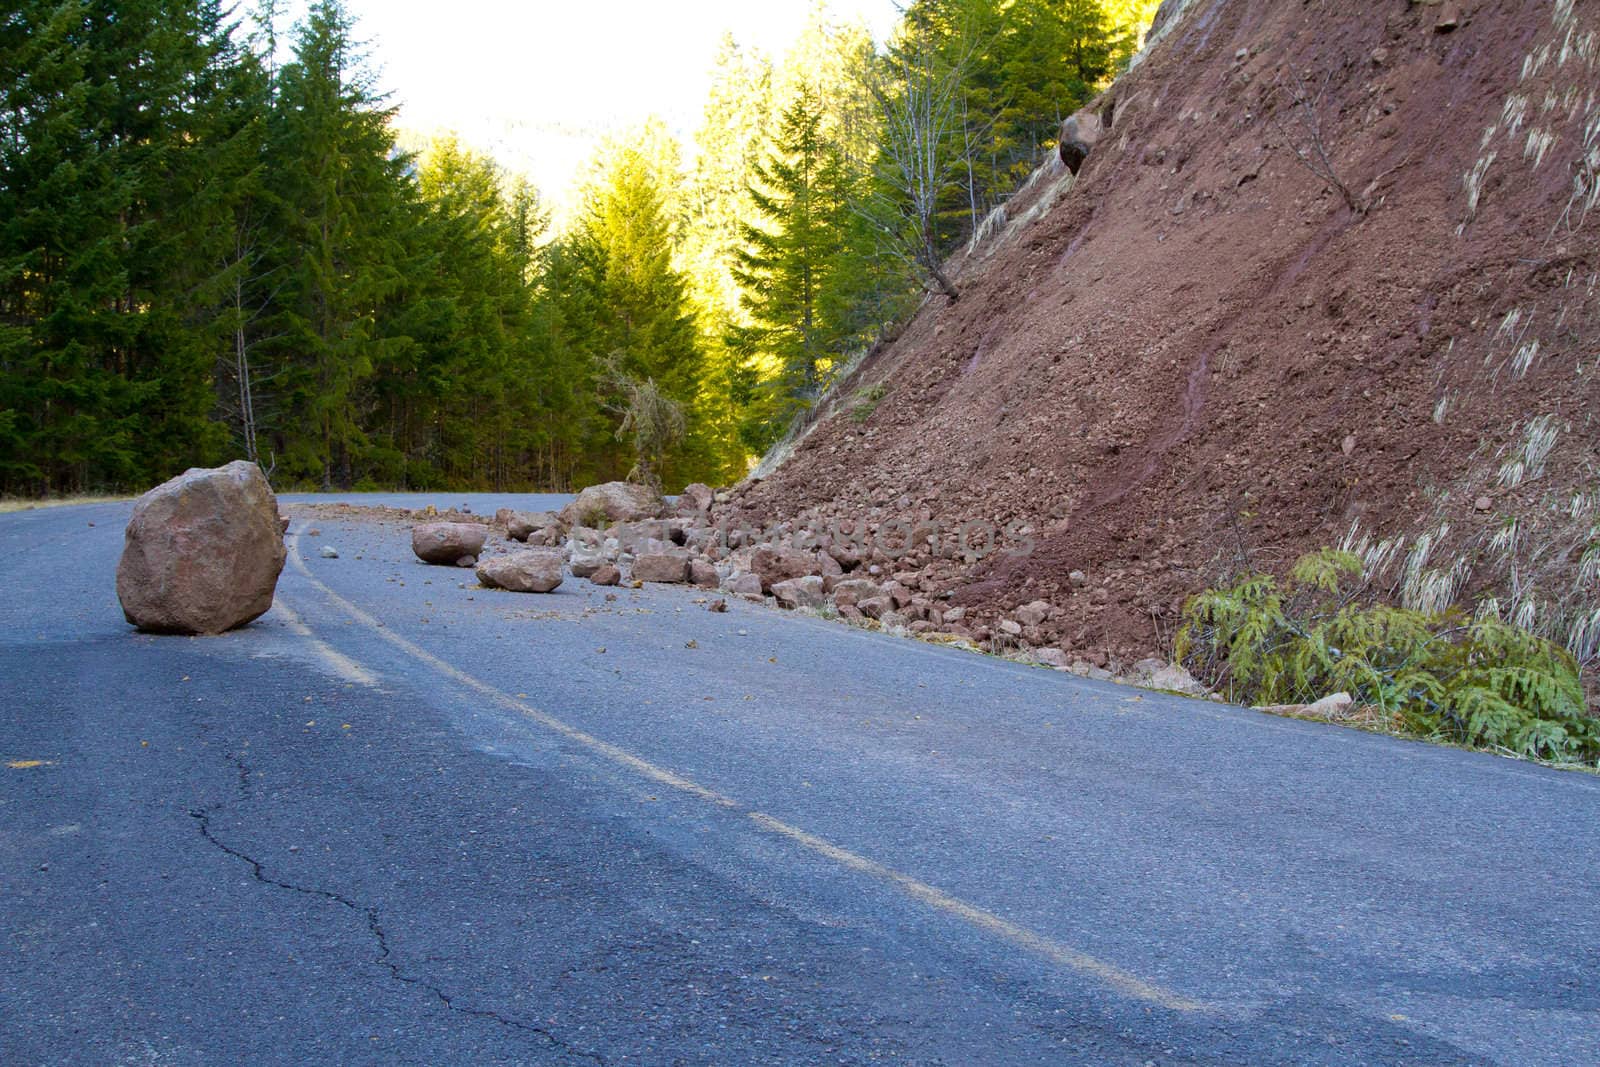 Landslide Blocked Road by joshuaraineyphotography